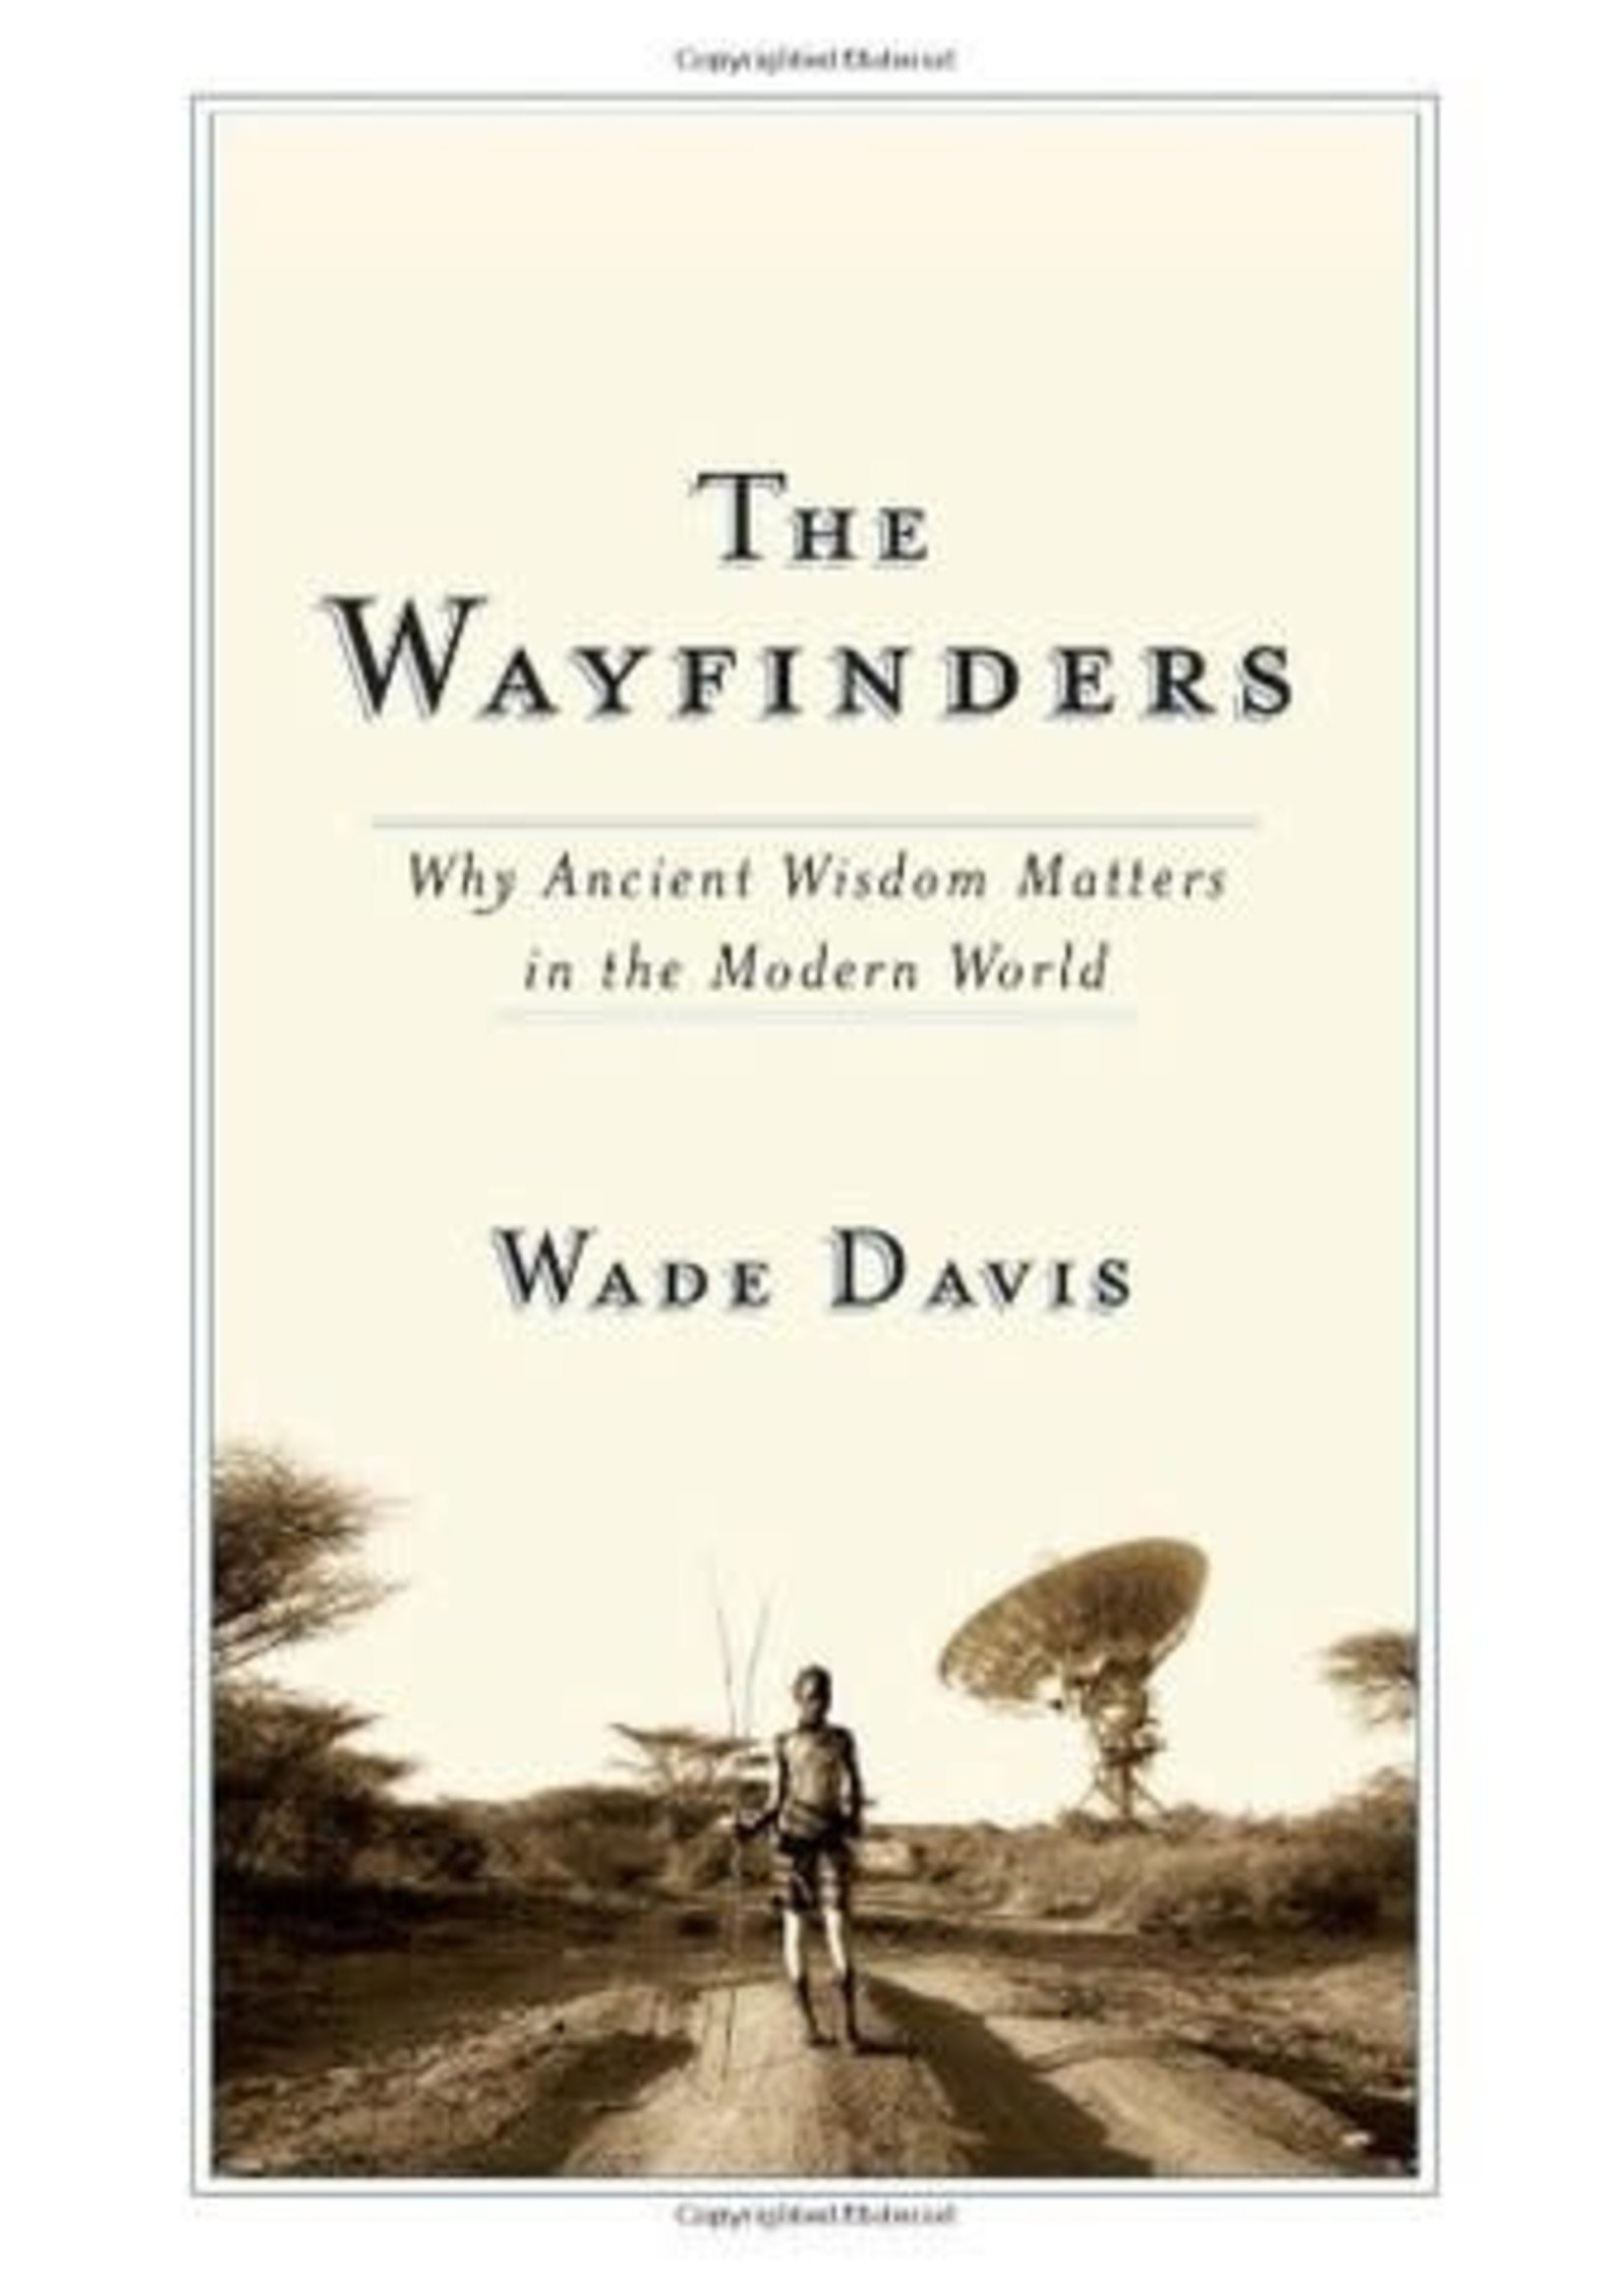 The Wayfinders by Wade Davis